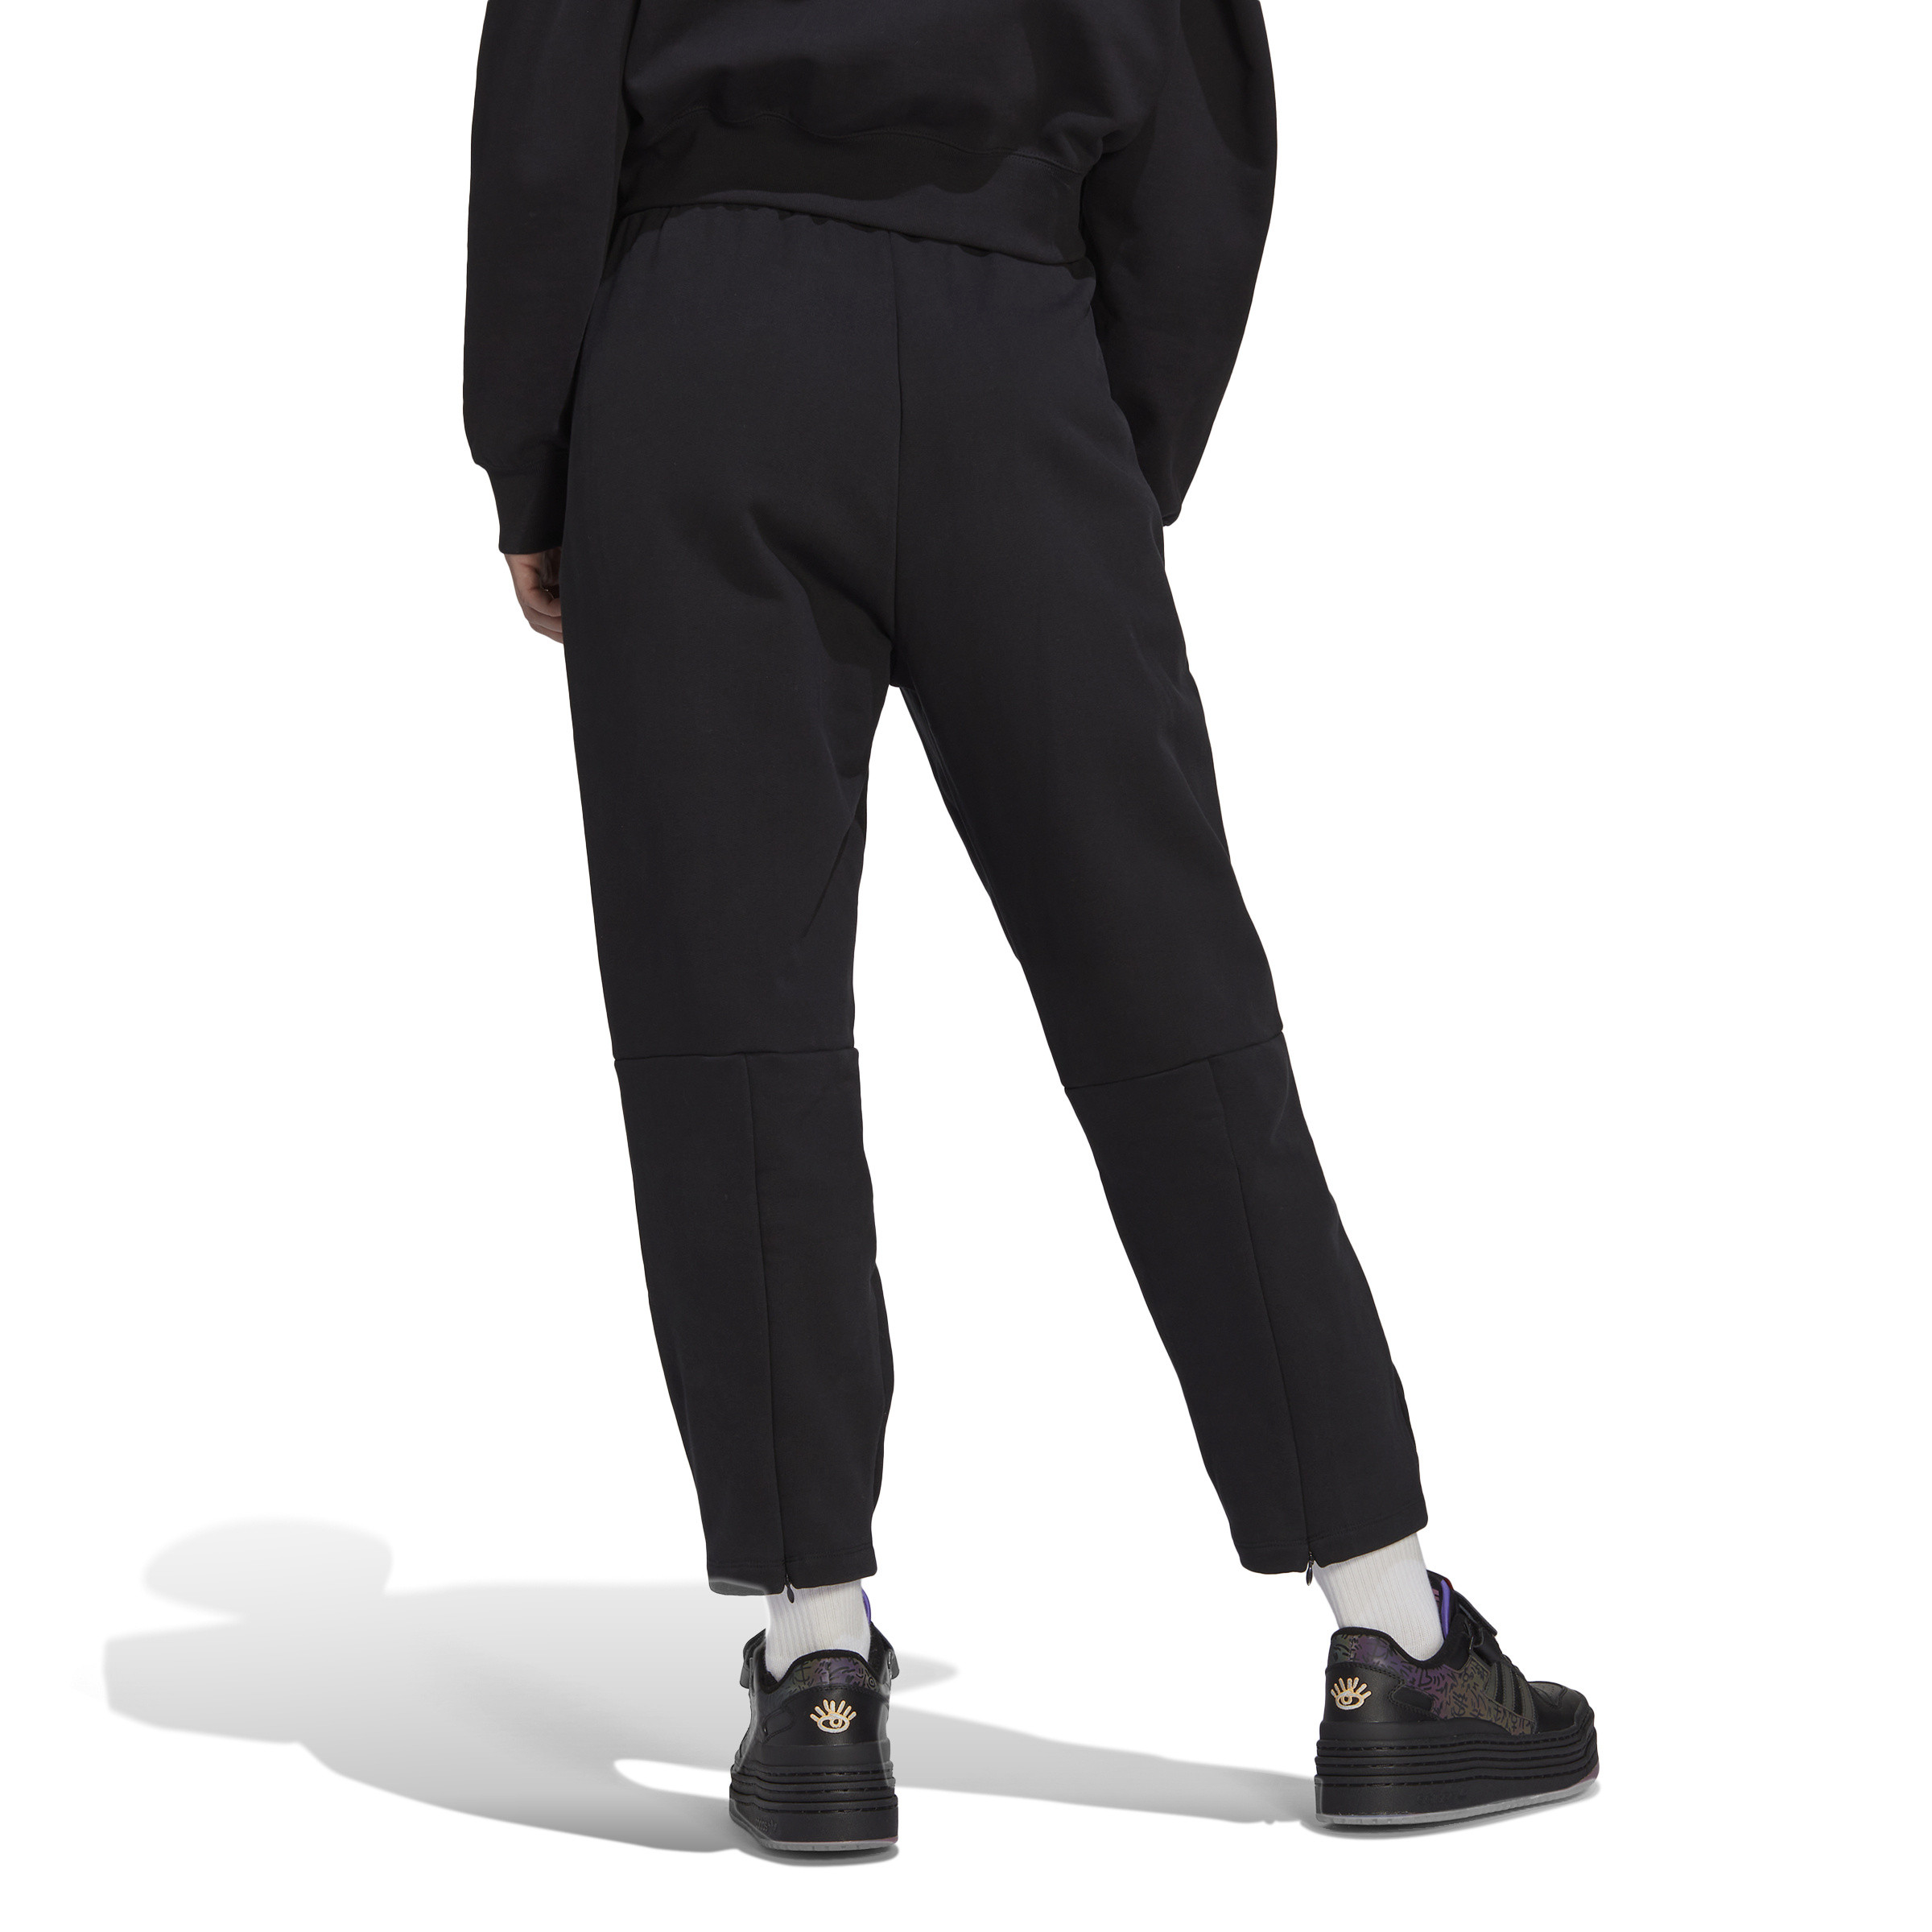 Adidas - Pantaloni jogger adicolor relaxed fit, Nero, large